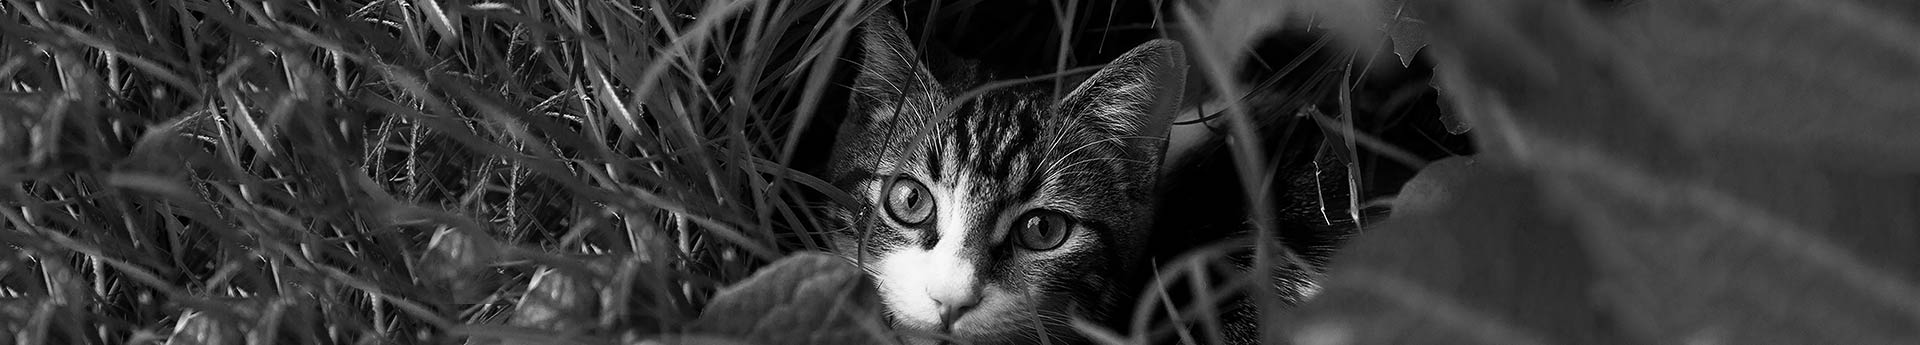 ORIJEN Cat & Kitten Dry Cat Food - Cat stealthily hiding in grass - Binx from Surprise, Arizona